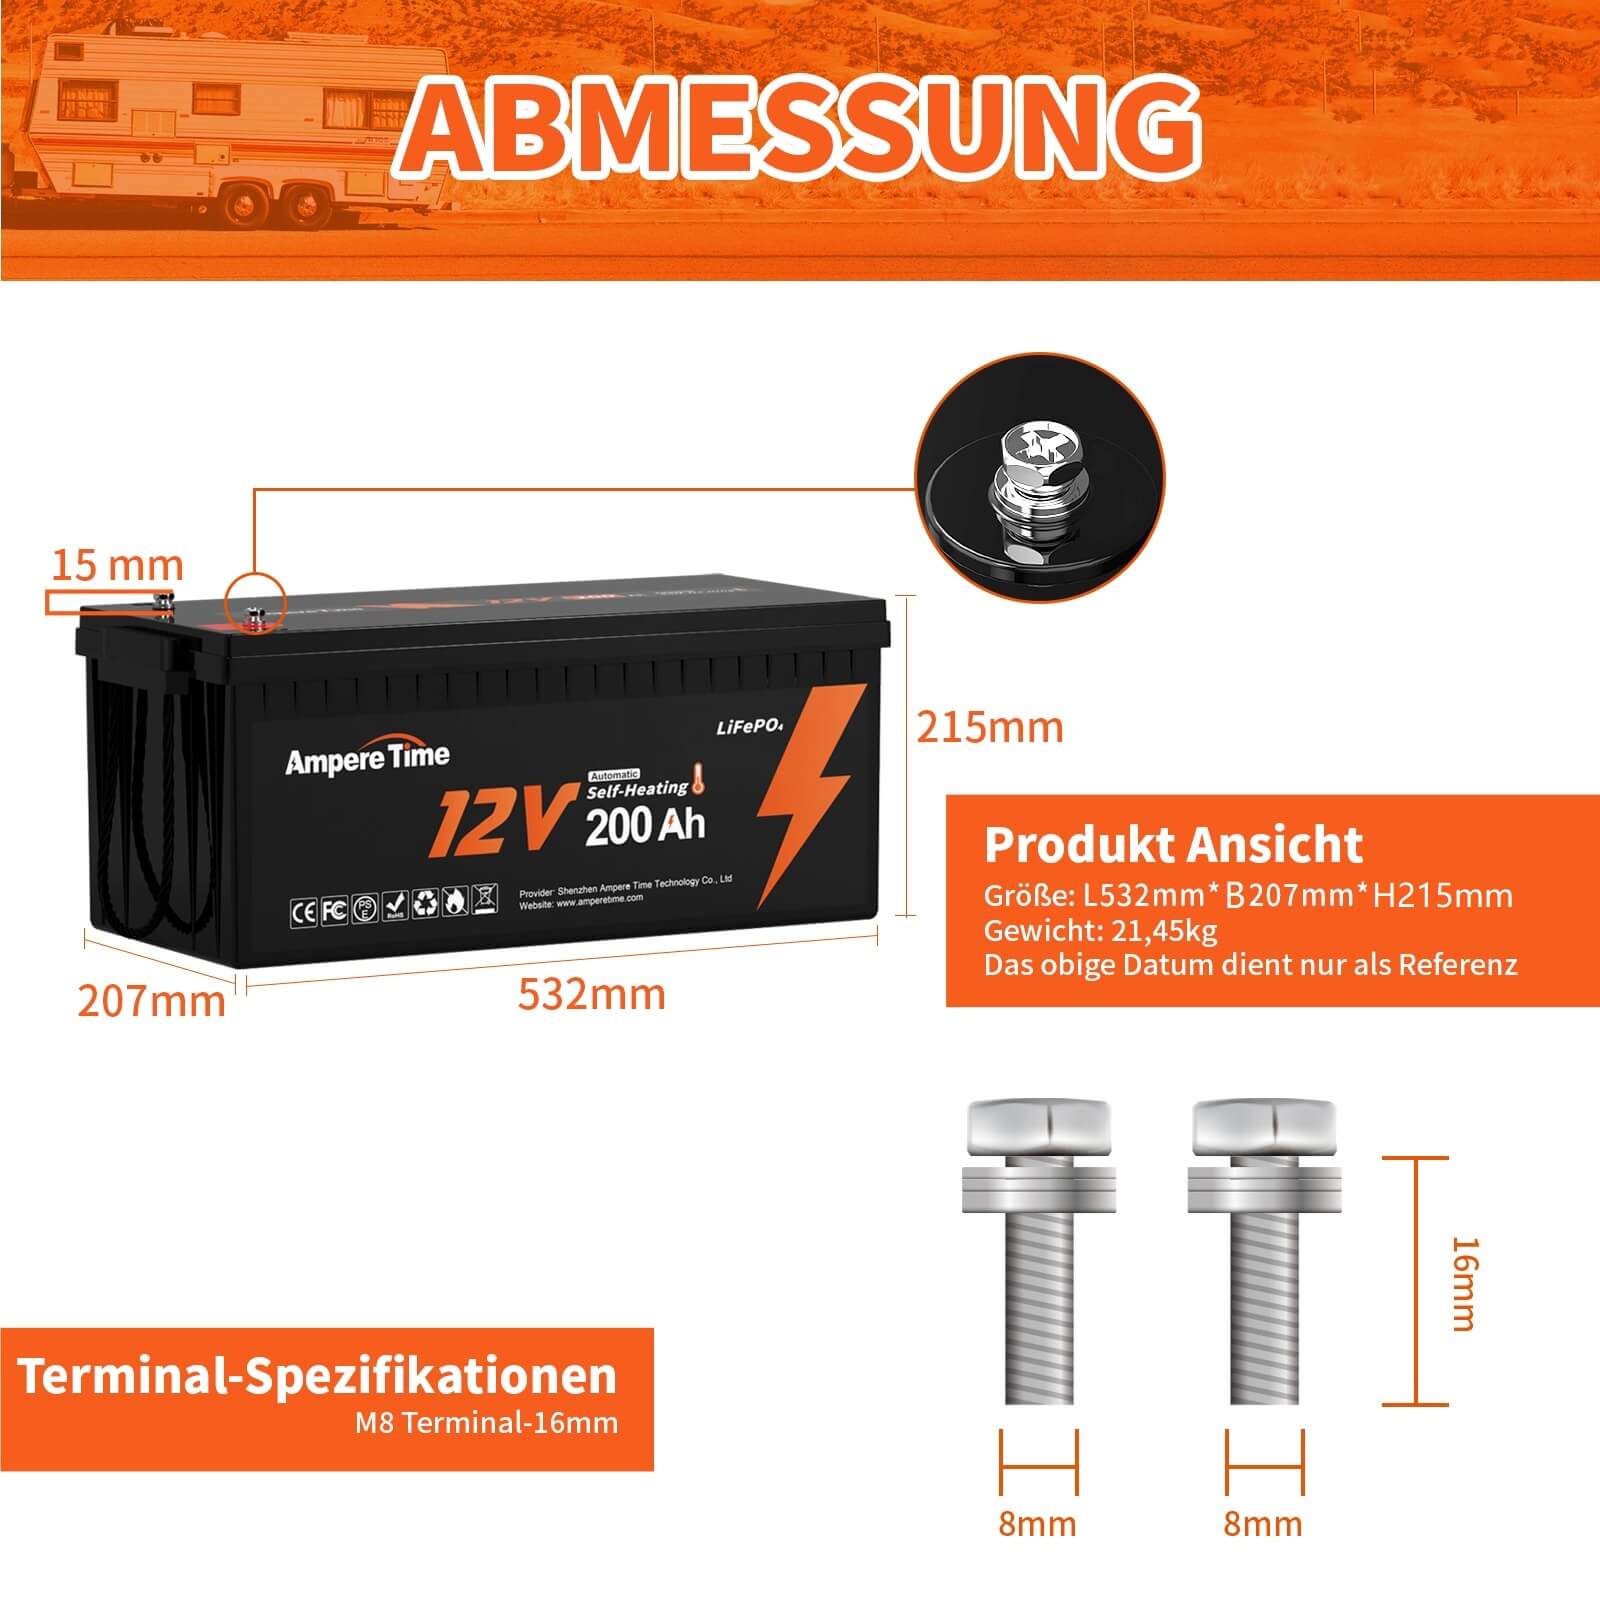 Ampere Time Selbsterwärmende 12V Akku 200Ah LiFePO4 Lithium-Batterie Unterstützung Laden bei niedriger Temperatur (-20℃) Amperetime DE